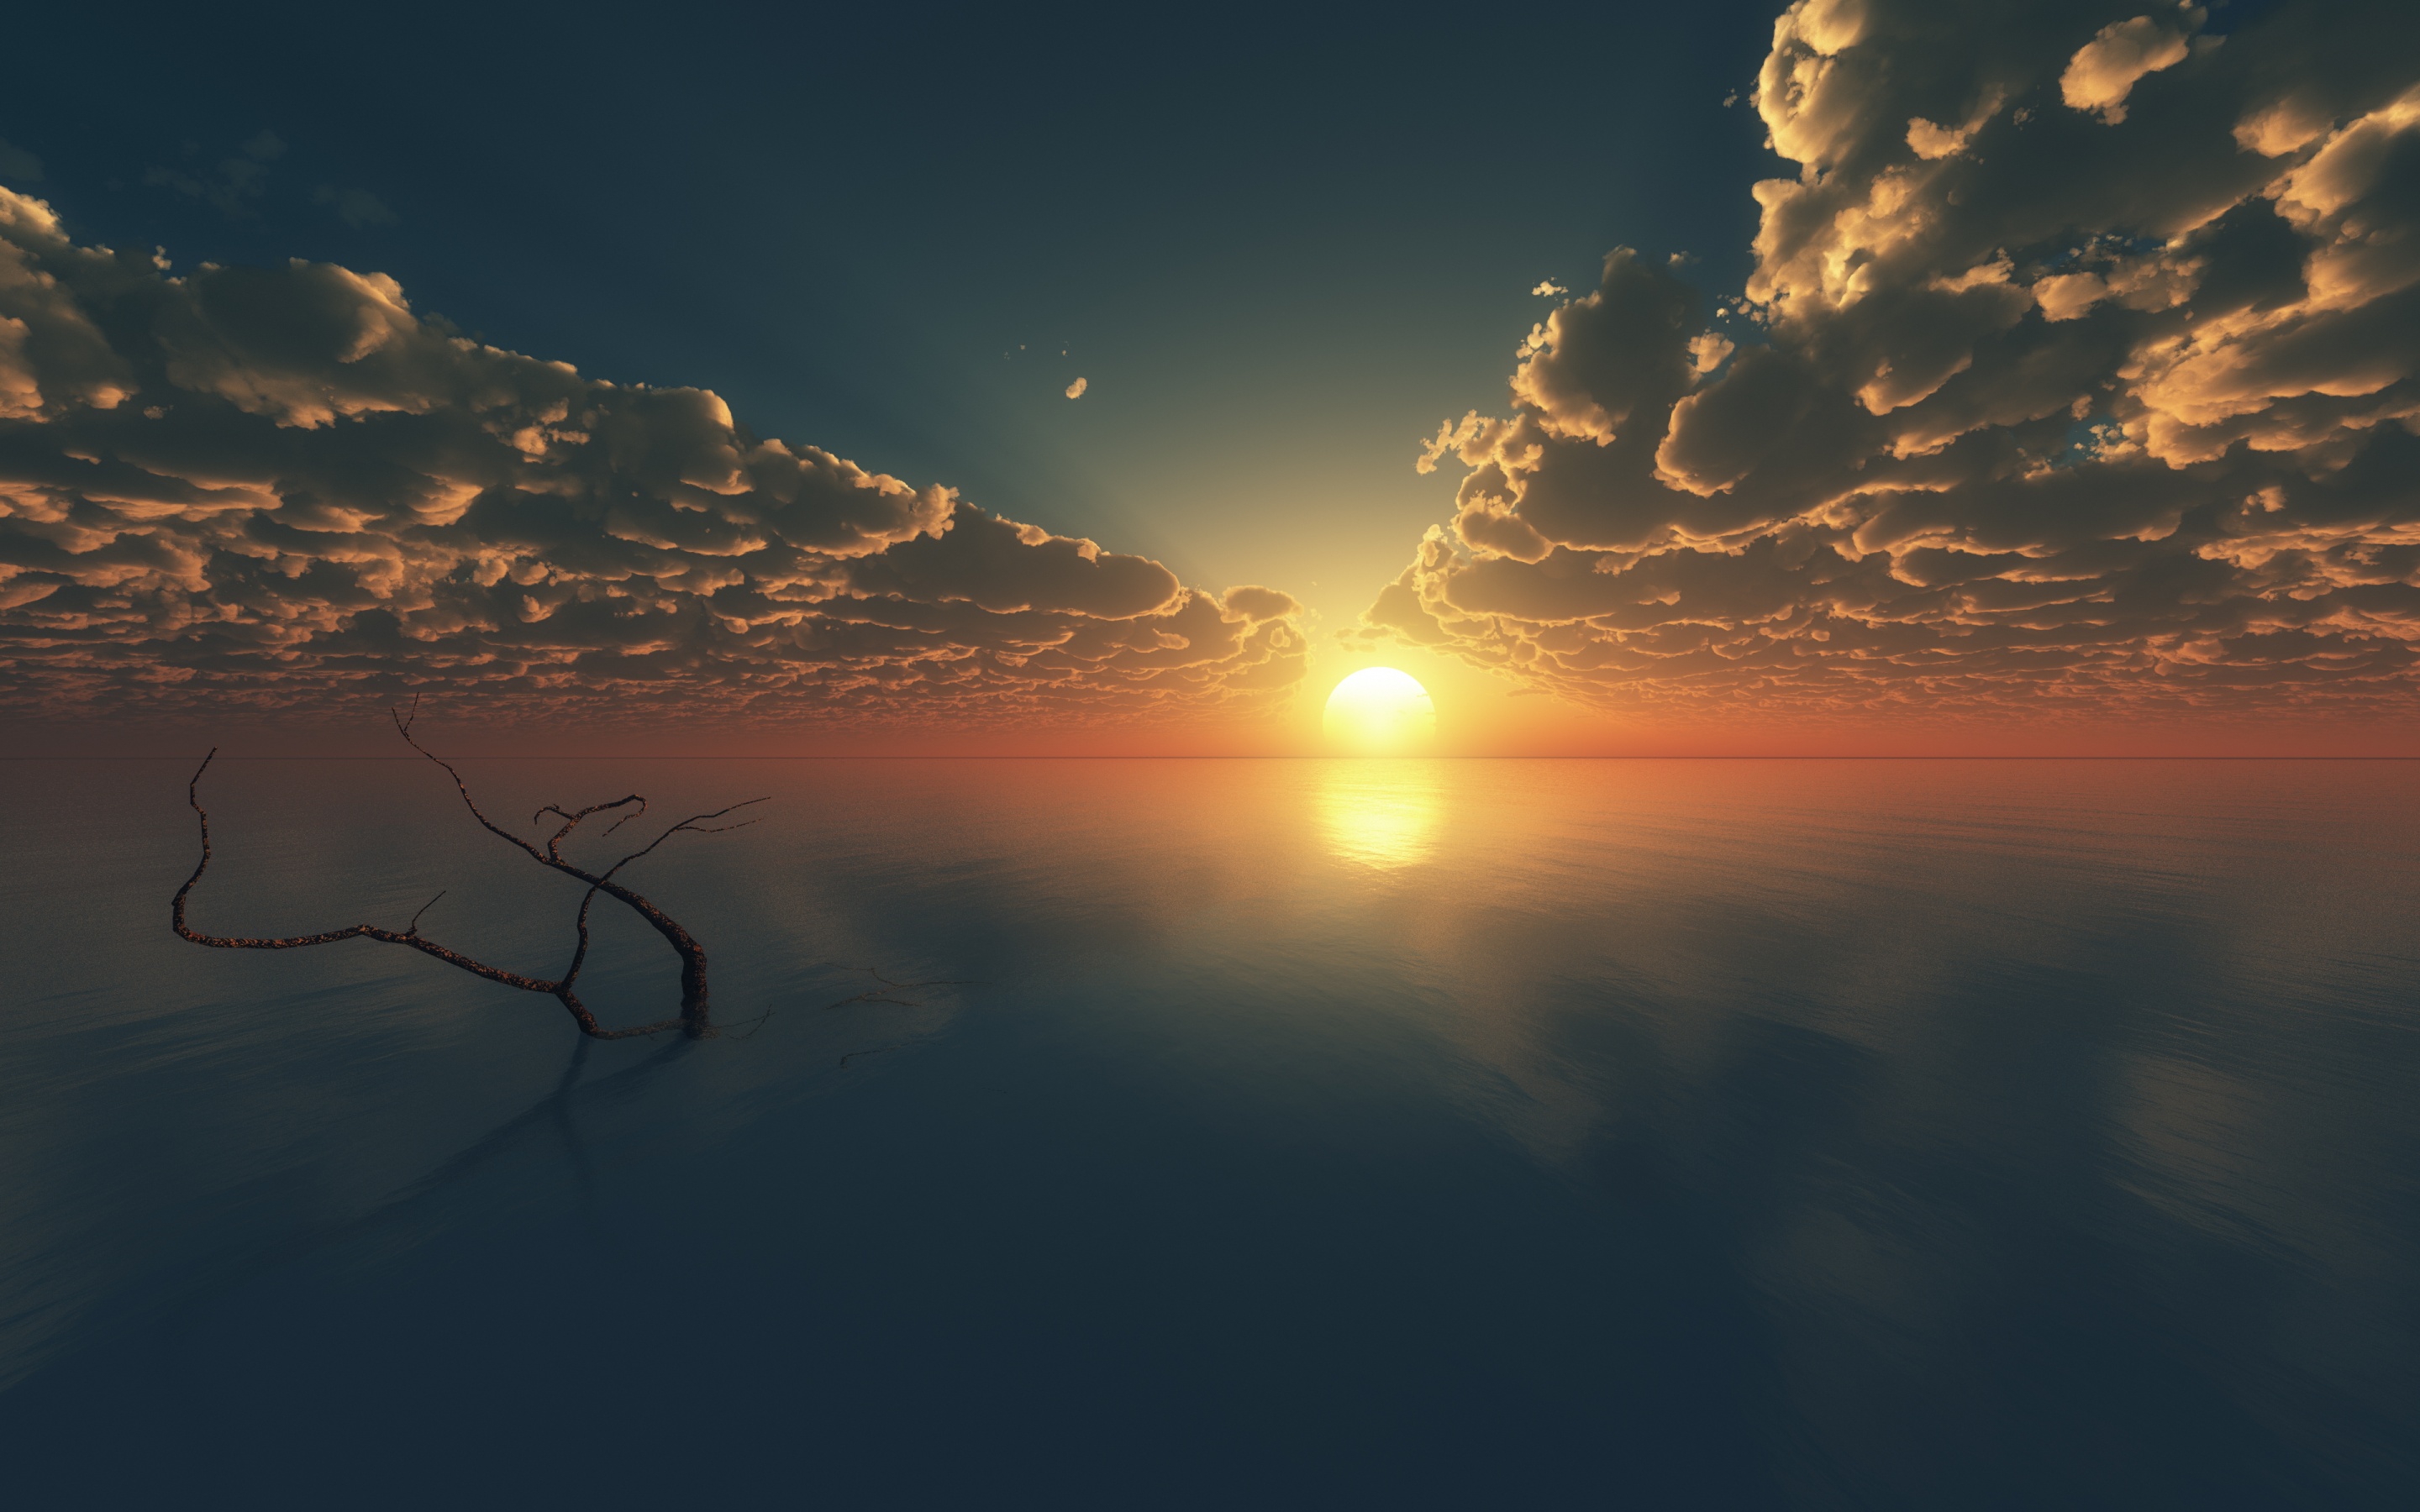 desktop backgrounds sunset